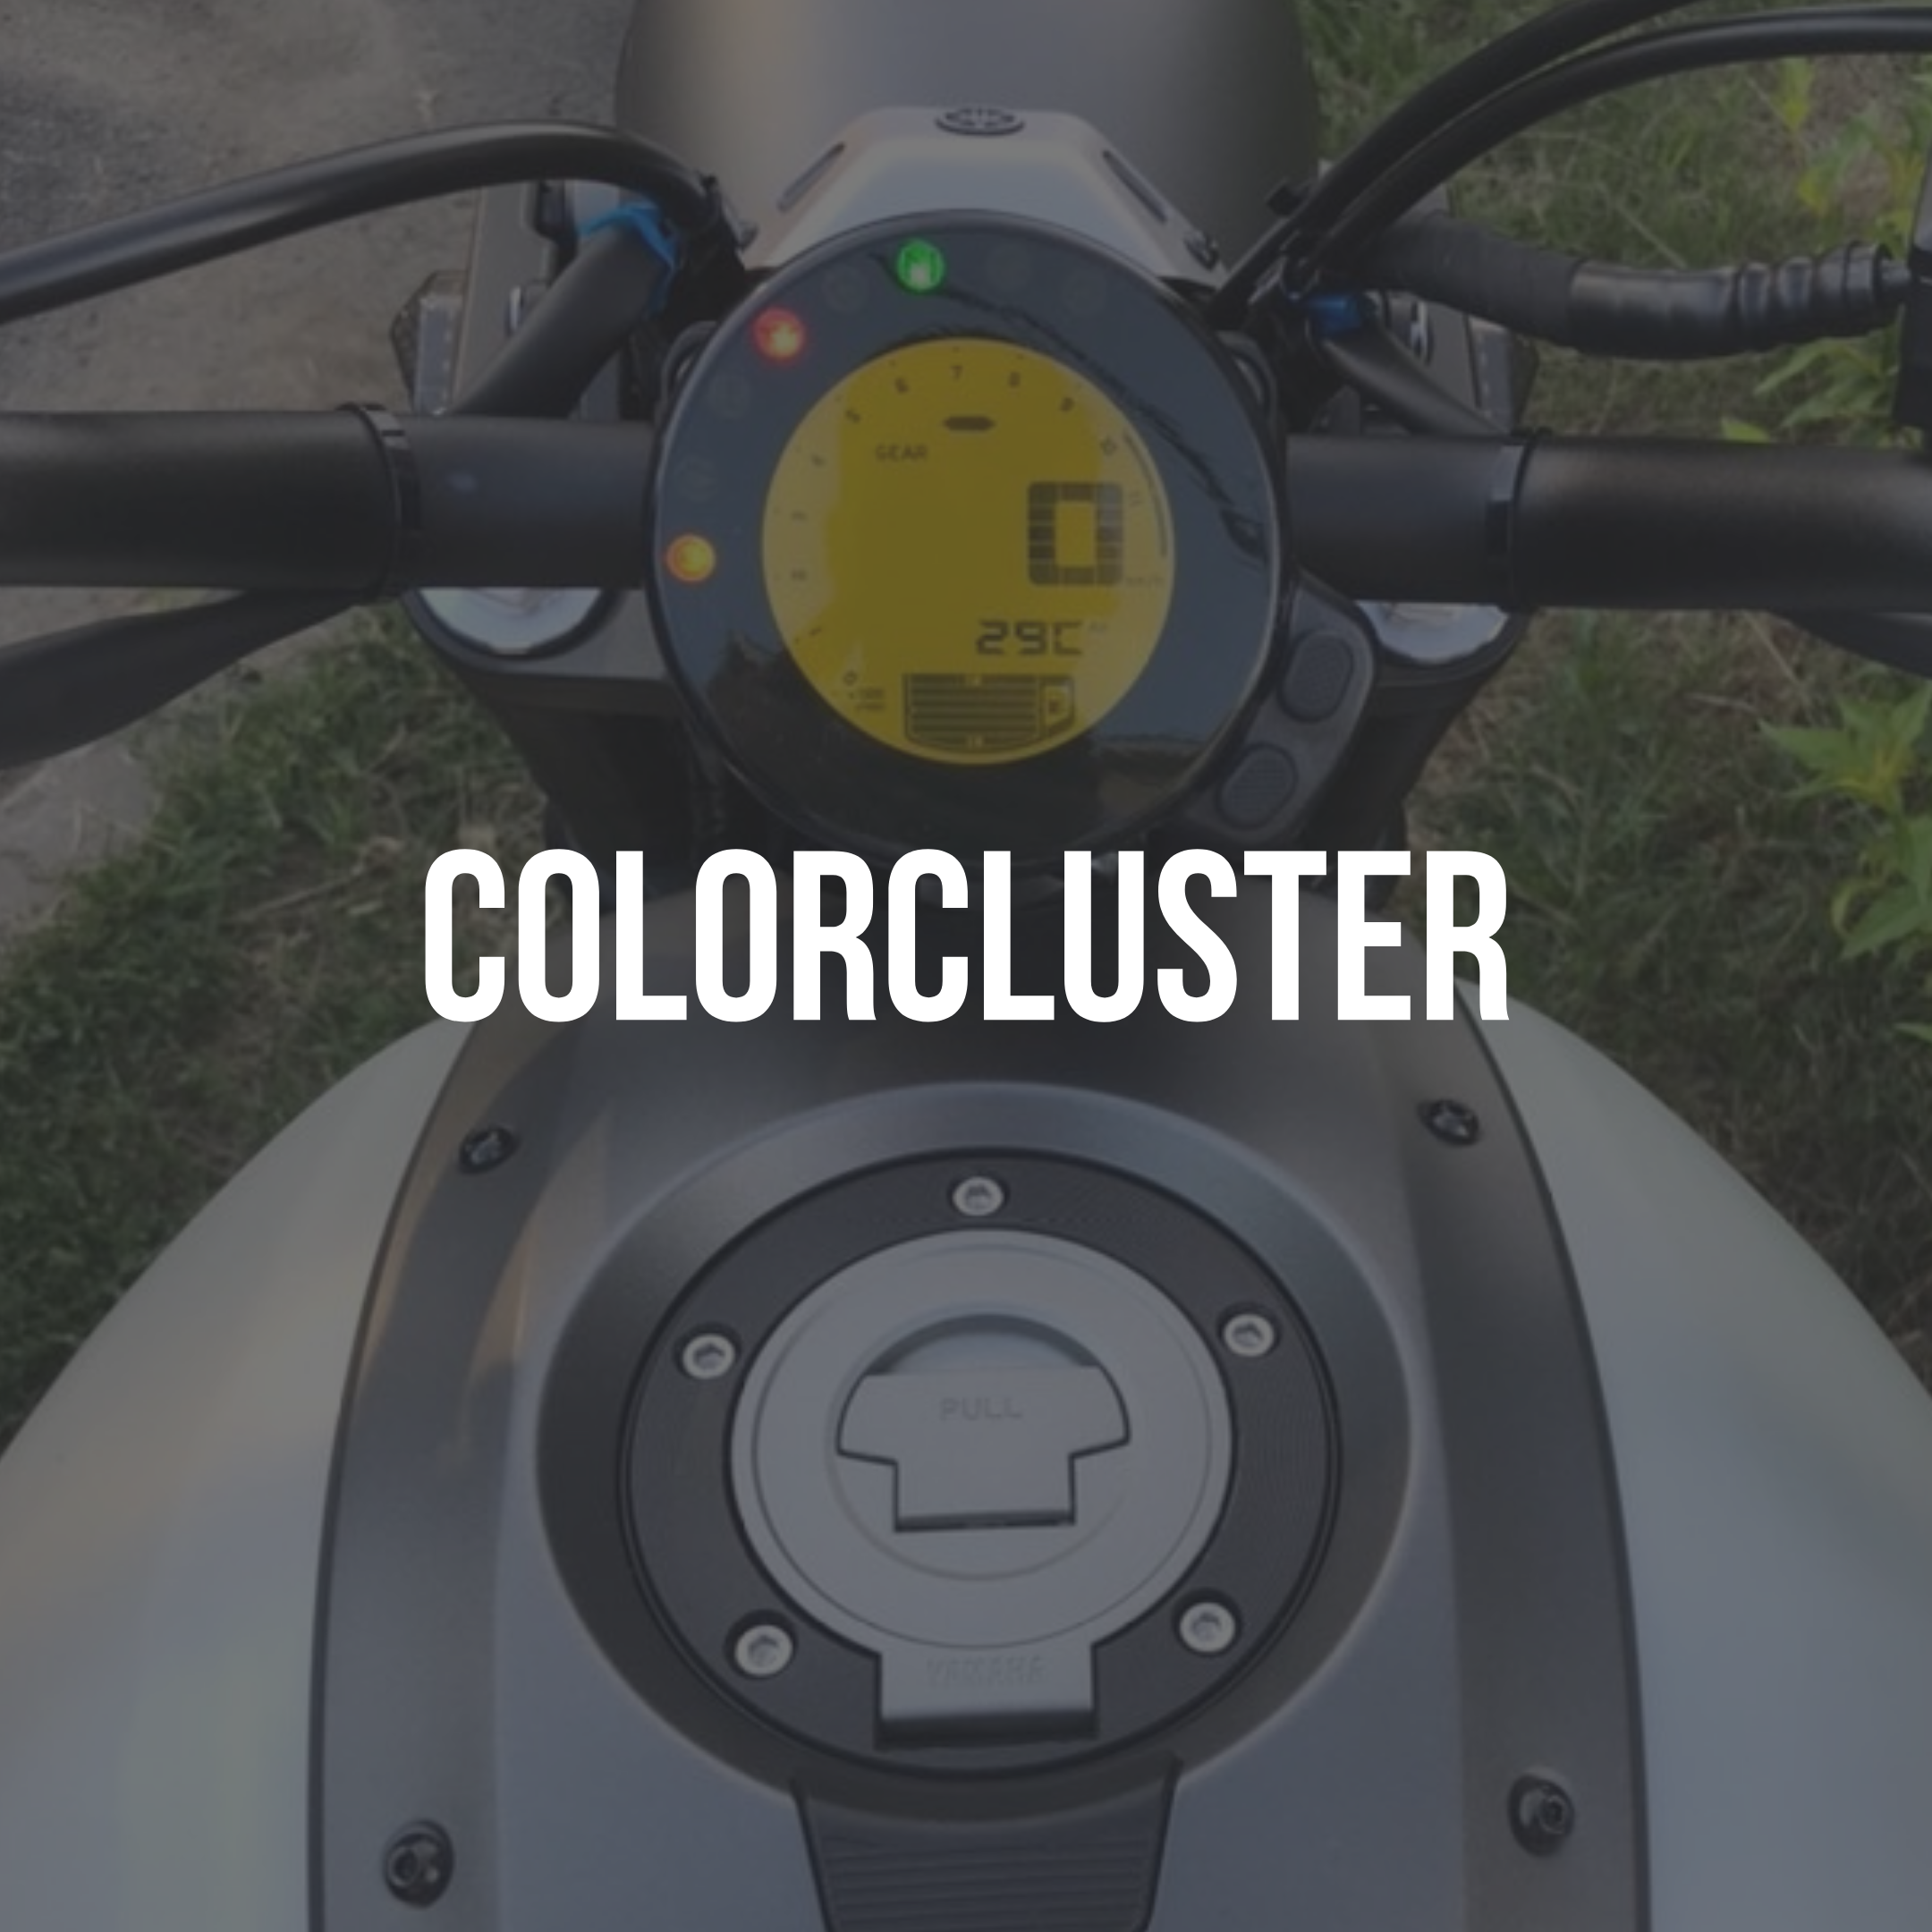 ColorCluster - Yamaha XSR 700